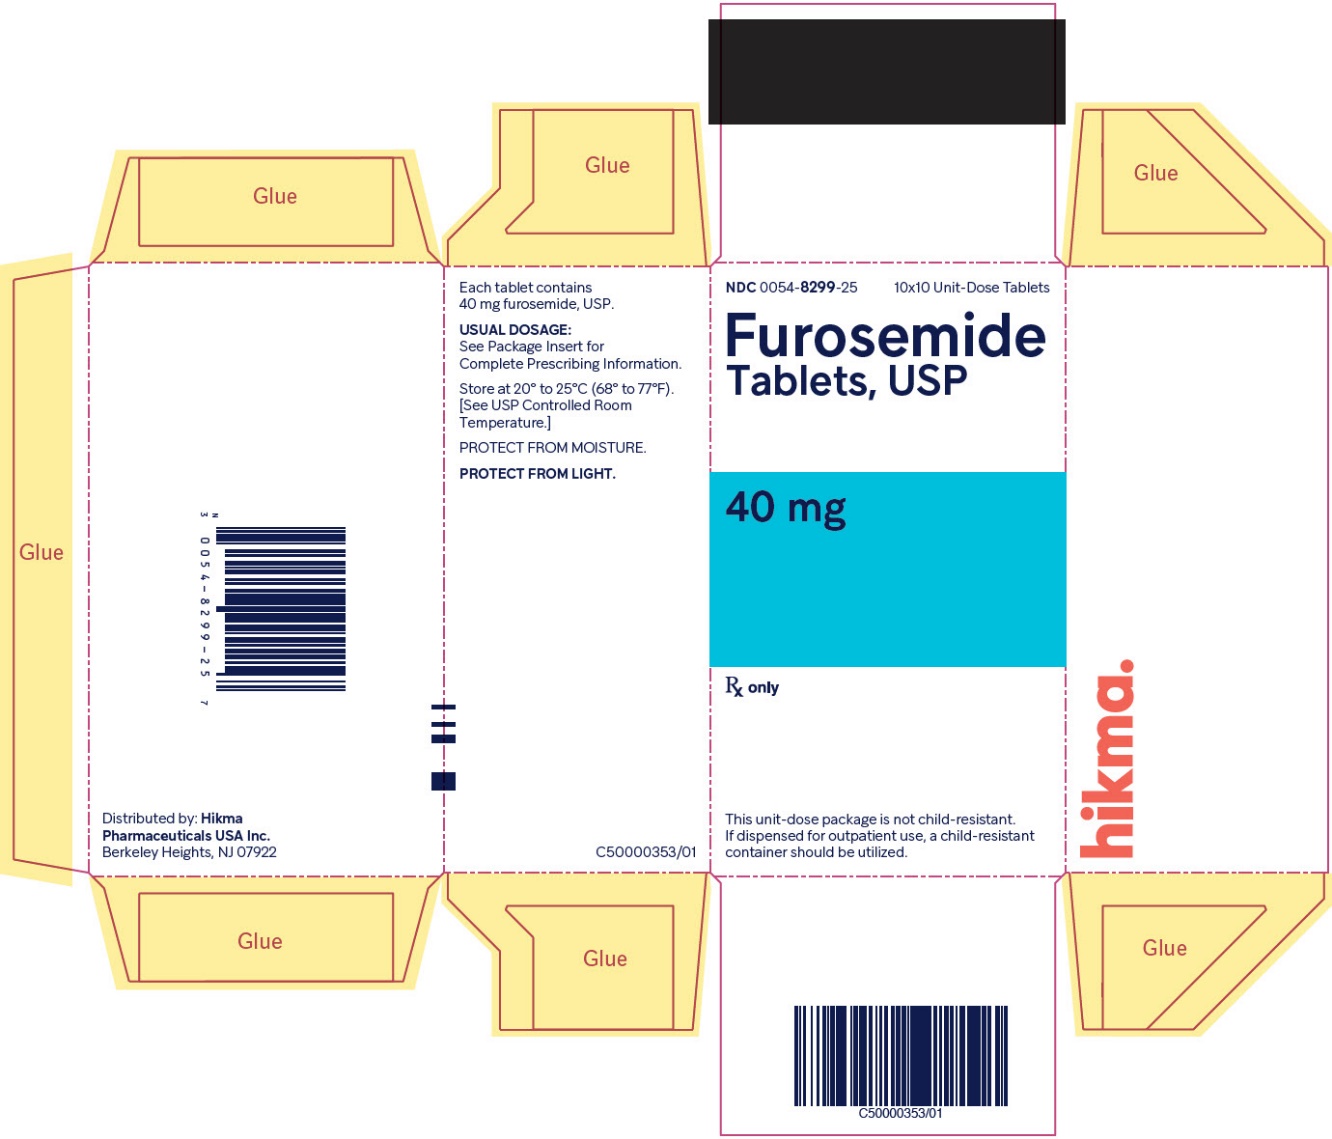 Furosemide Tablets USP, 40 mg (10x10 Unit-Dose Tablets) folding carton image